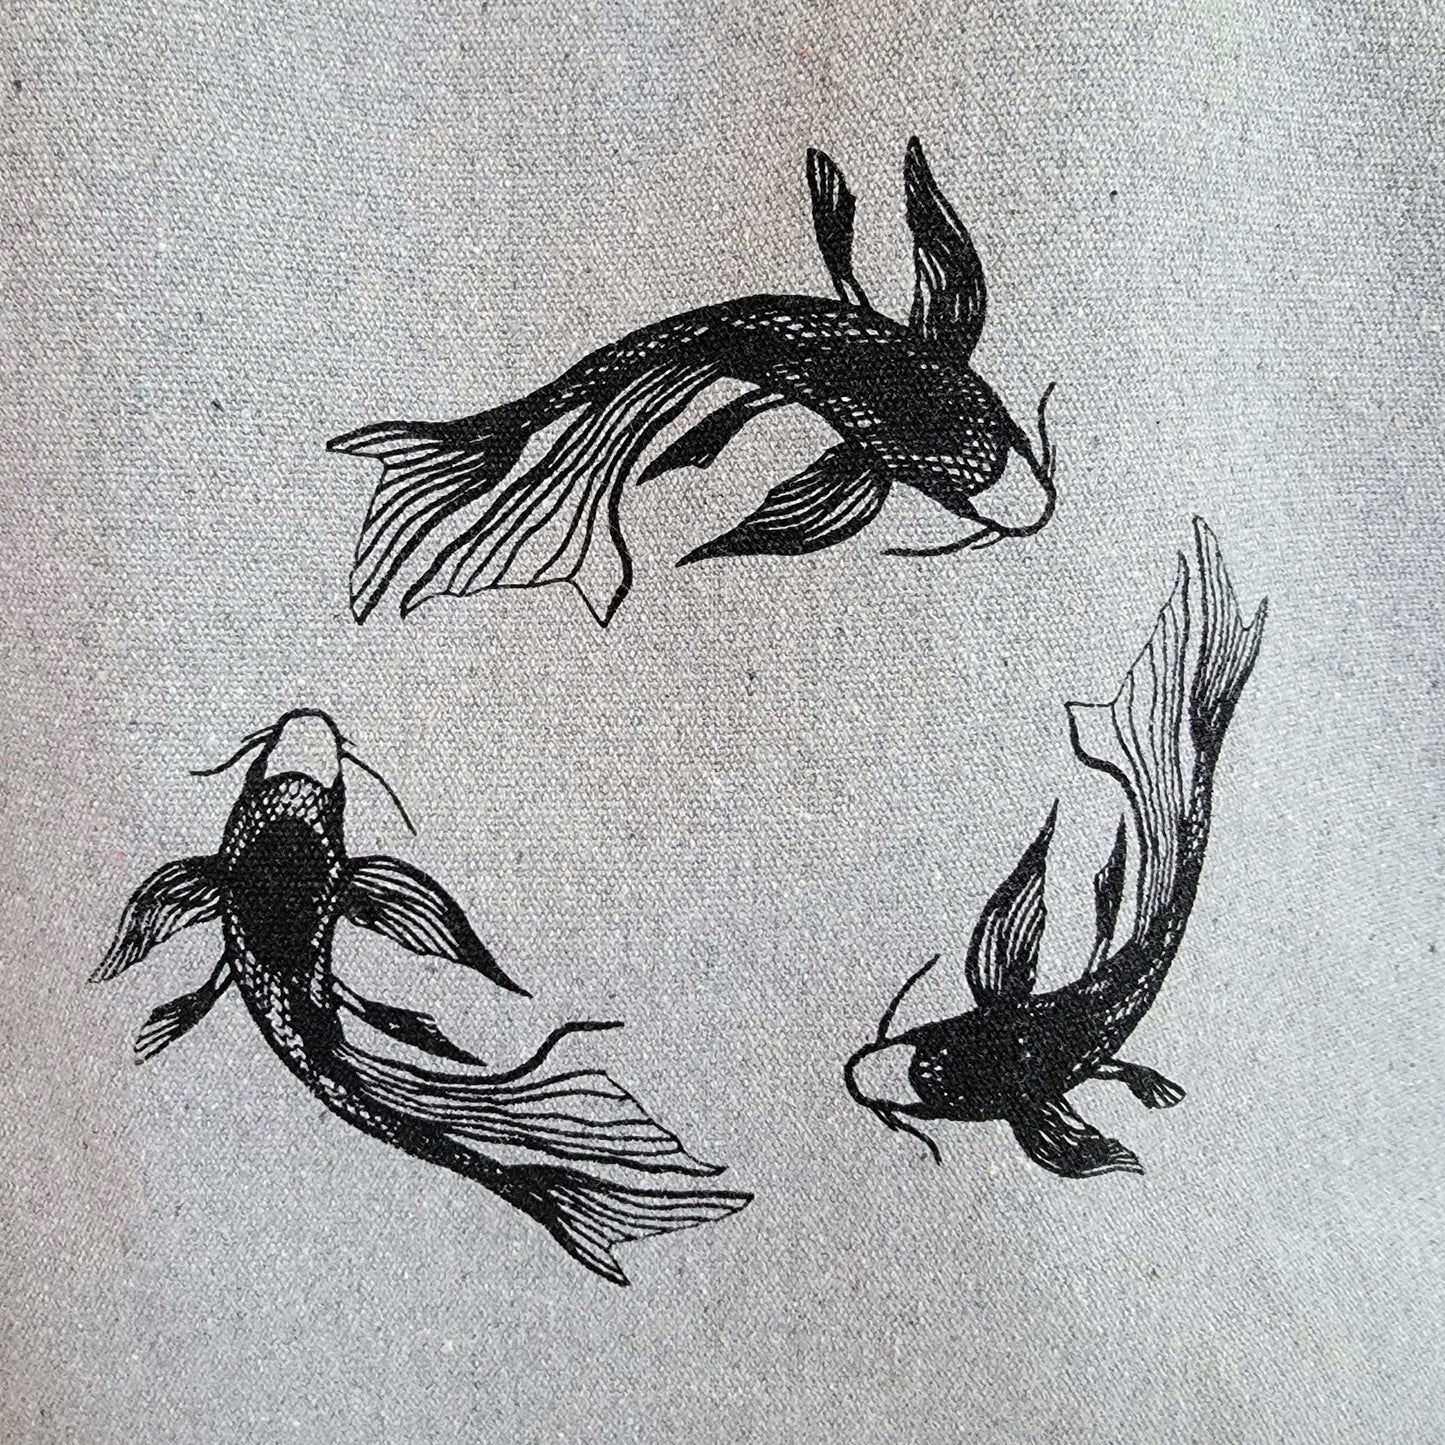 Koi Fish Recycled Canvas Tote Bag - Black on Dark Grey - Print Image Shot